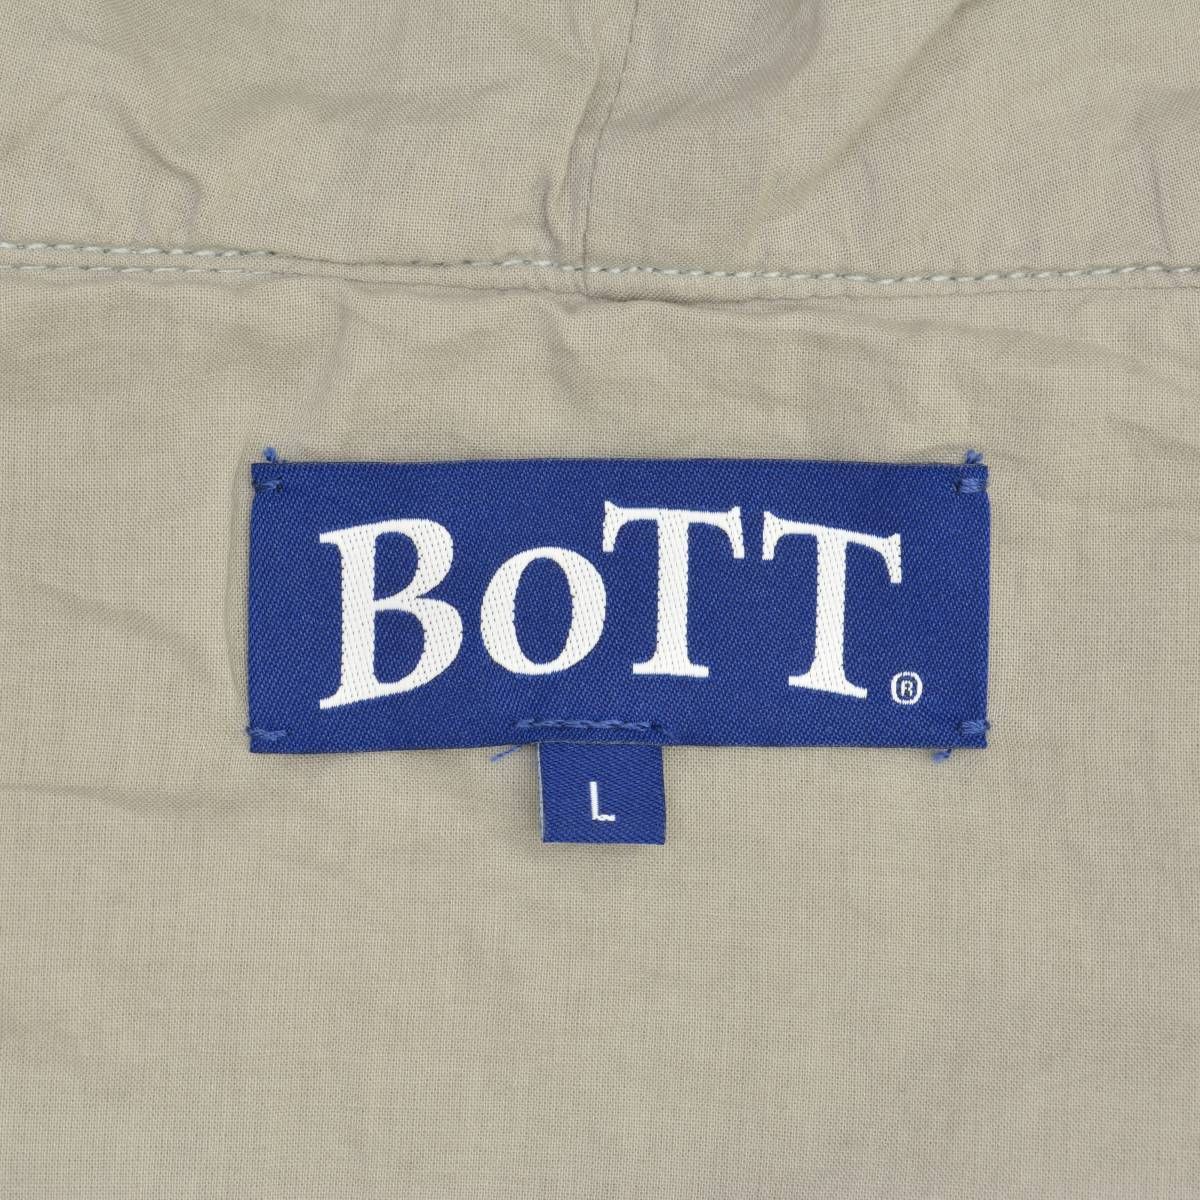 【BOTT】24SS Pigment Dyed Work Jacket フード付きコットンジャケット